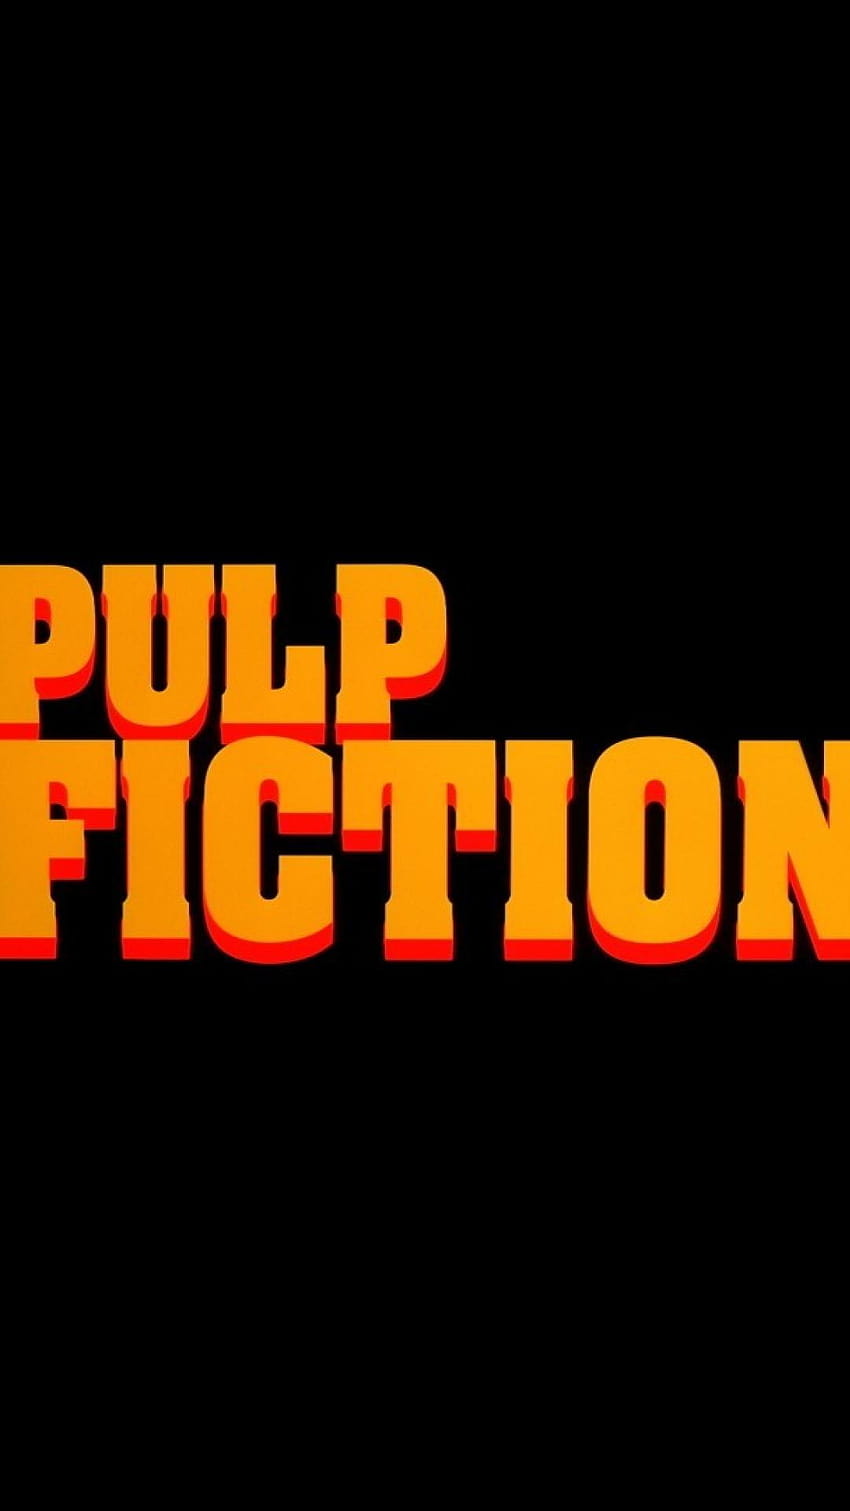 Pulp Fiction Phone, mobile pulp fiction HD phone wallpaper